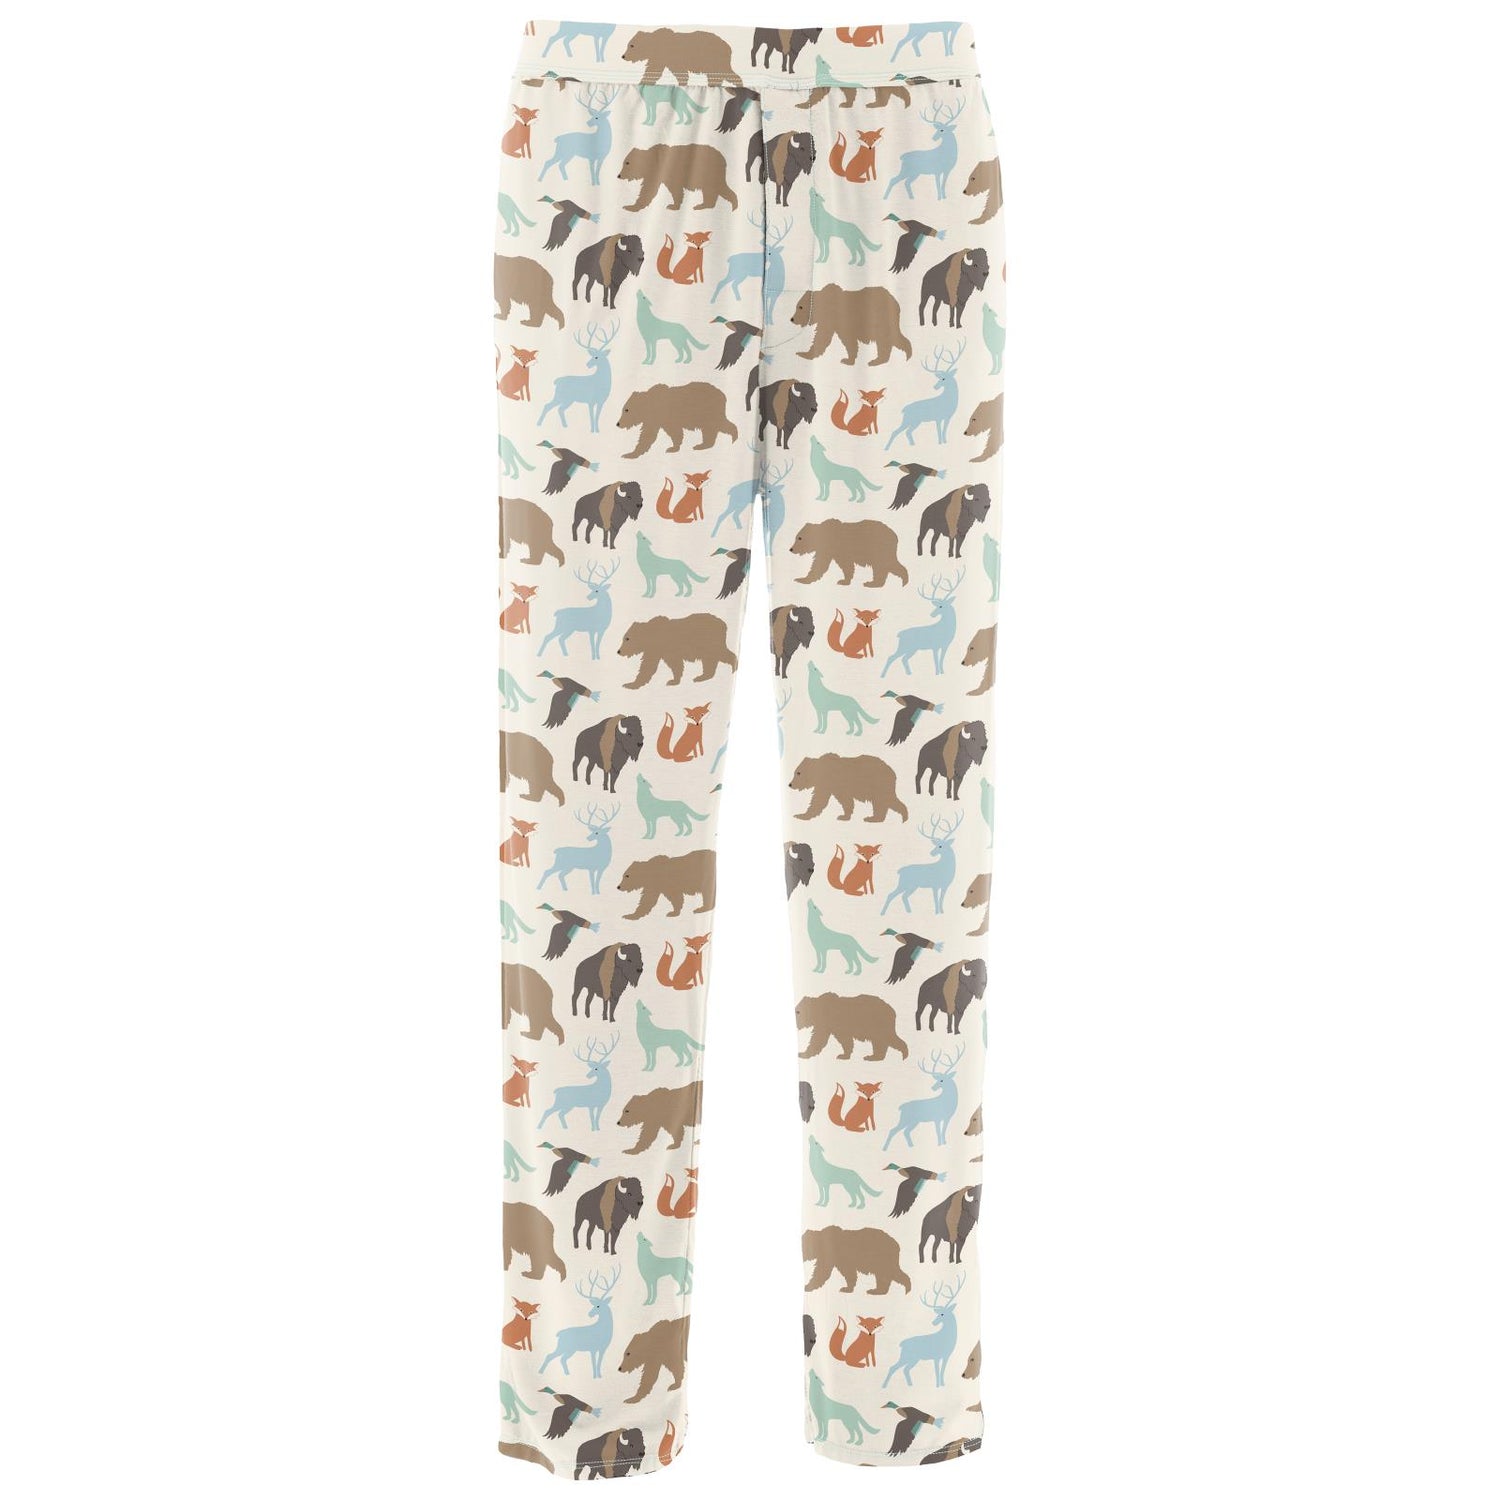 Men's Print Pajama Pants in National Wildlife Federation